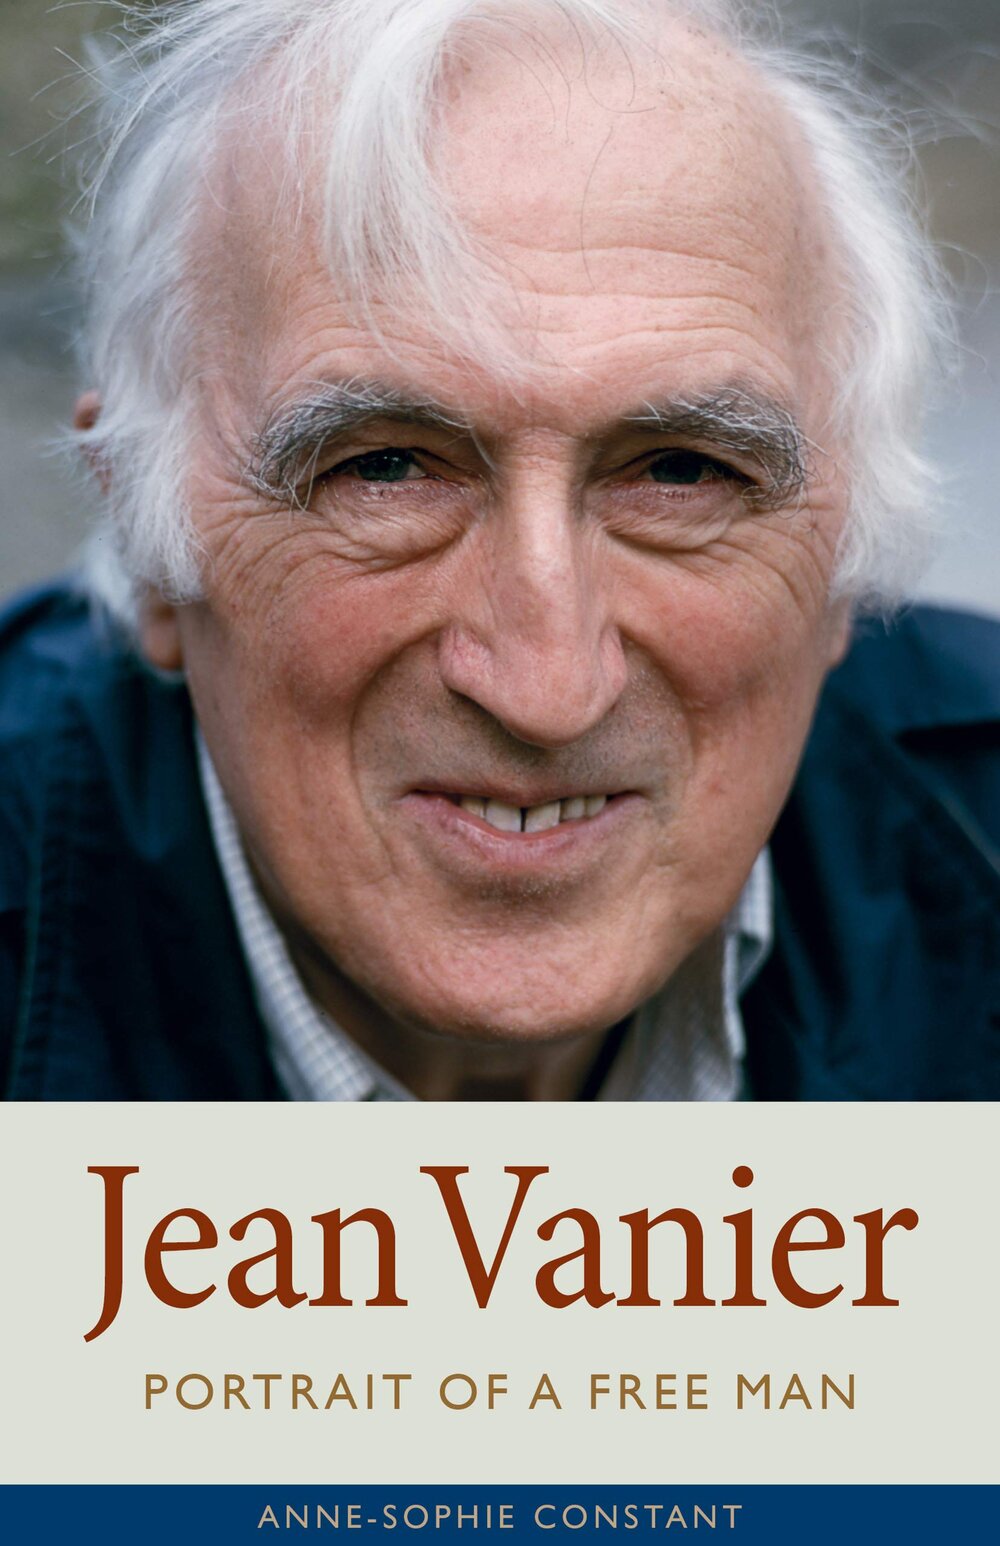 JEAN VANIER: PORTRAIT FREE MAN — The French Publishers' Agency